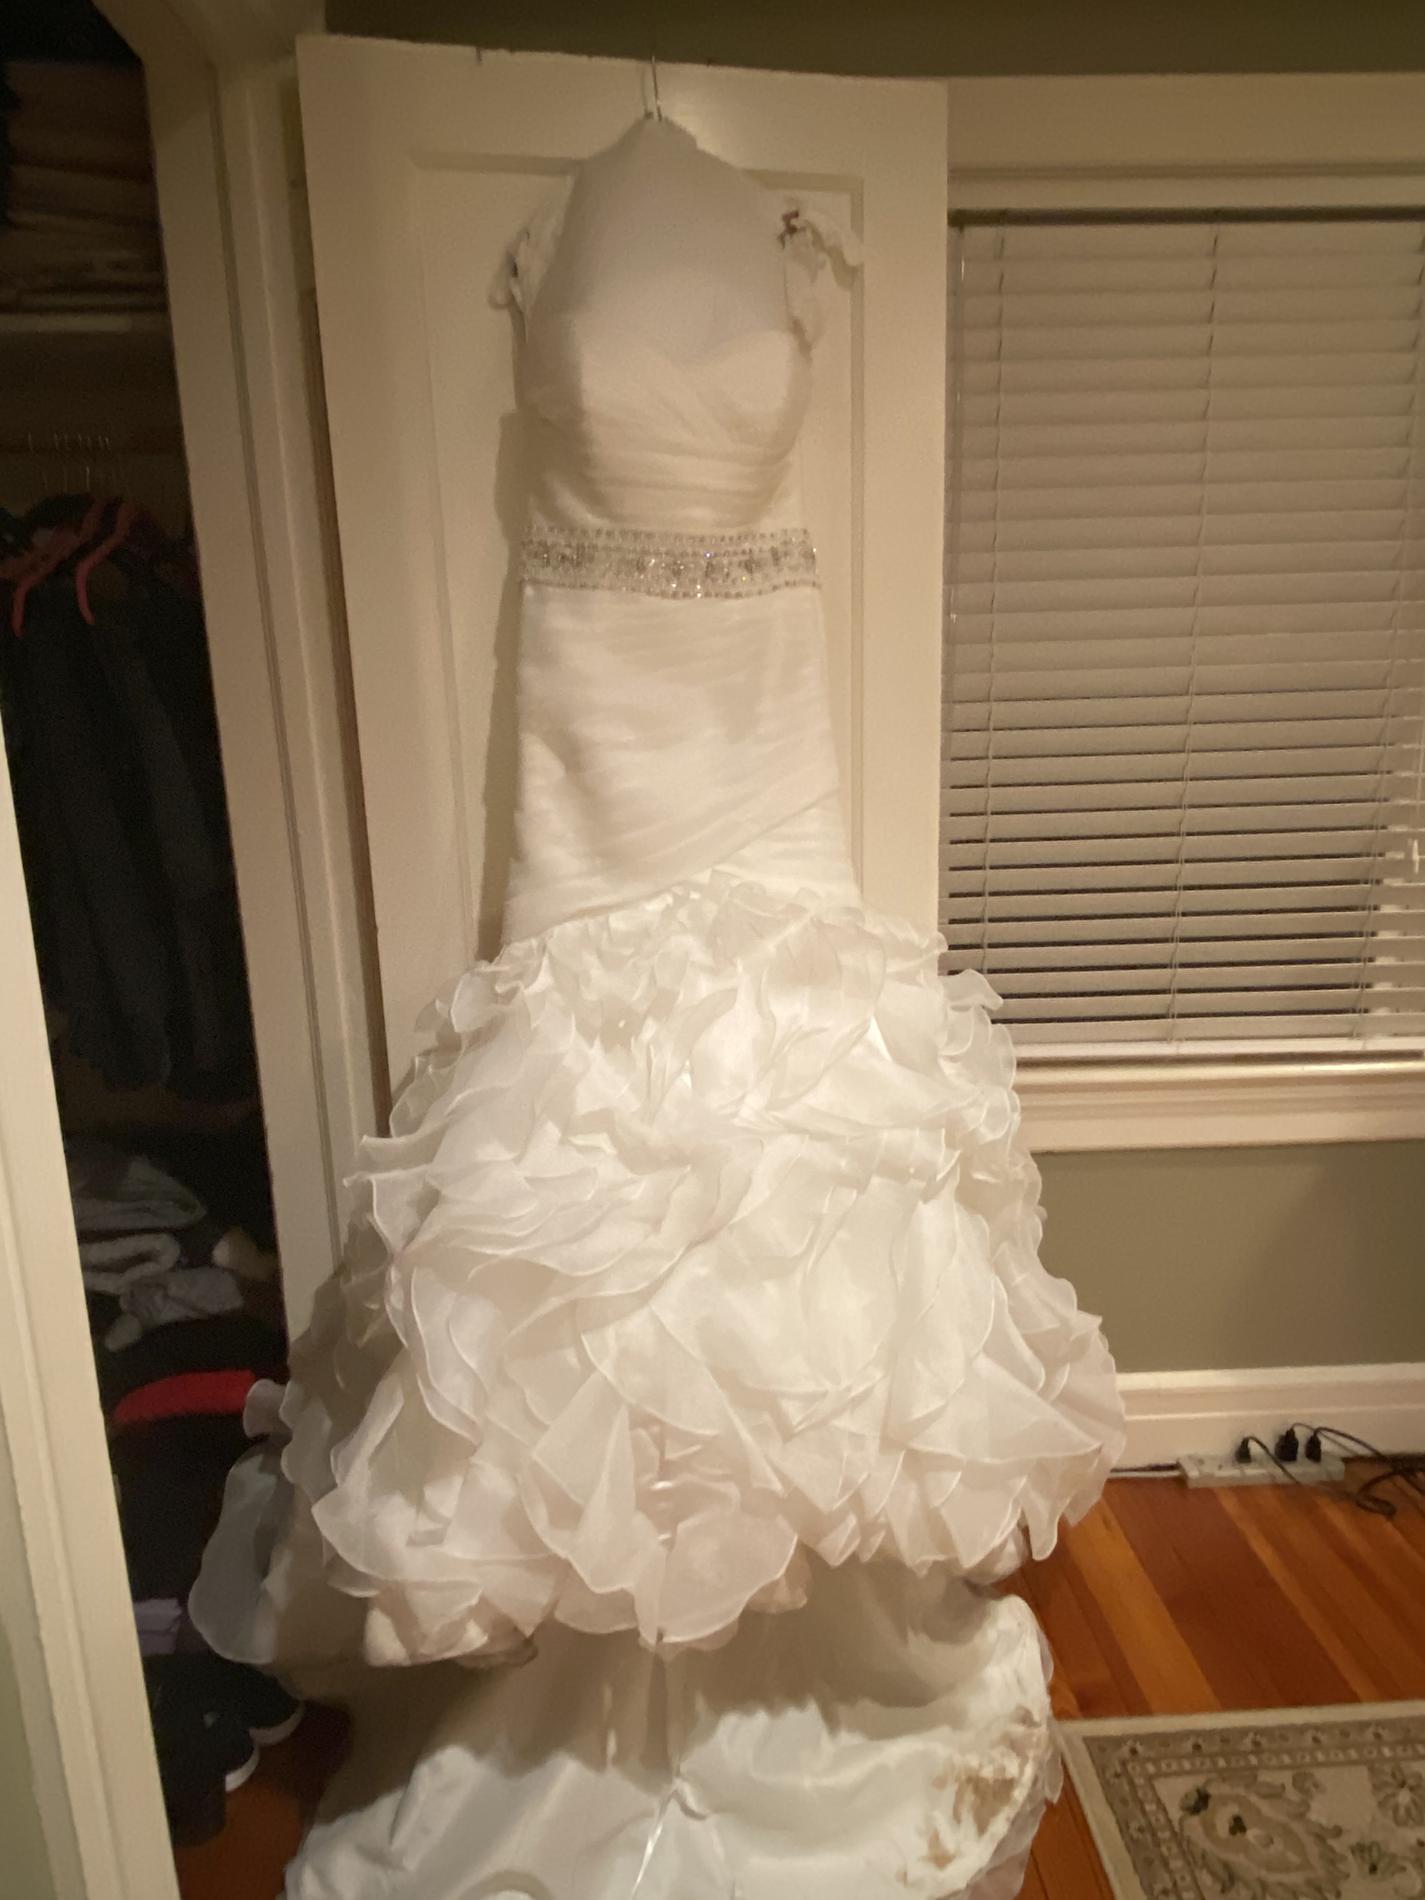 Size 10 Wedding Strapless White Mermaid Dress on Queenly